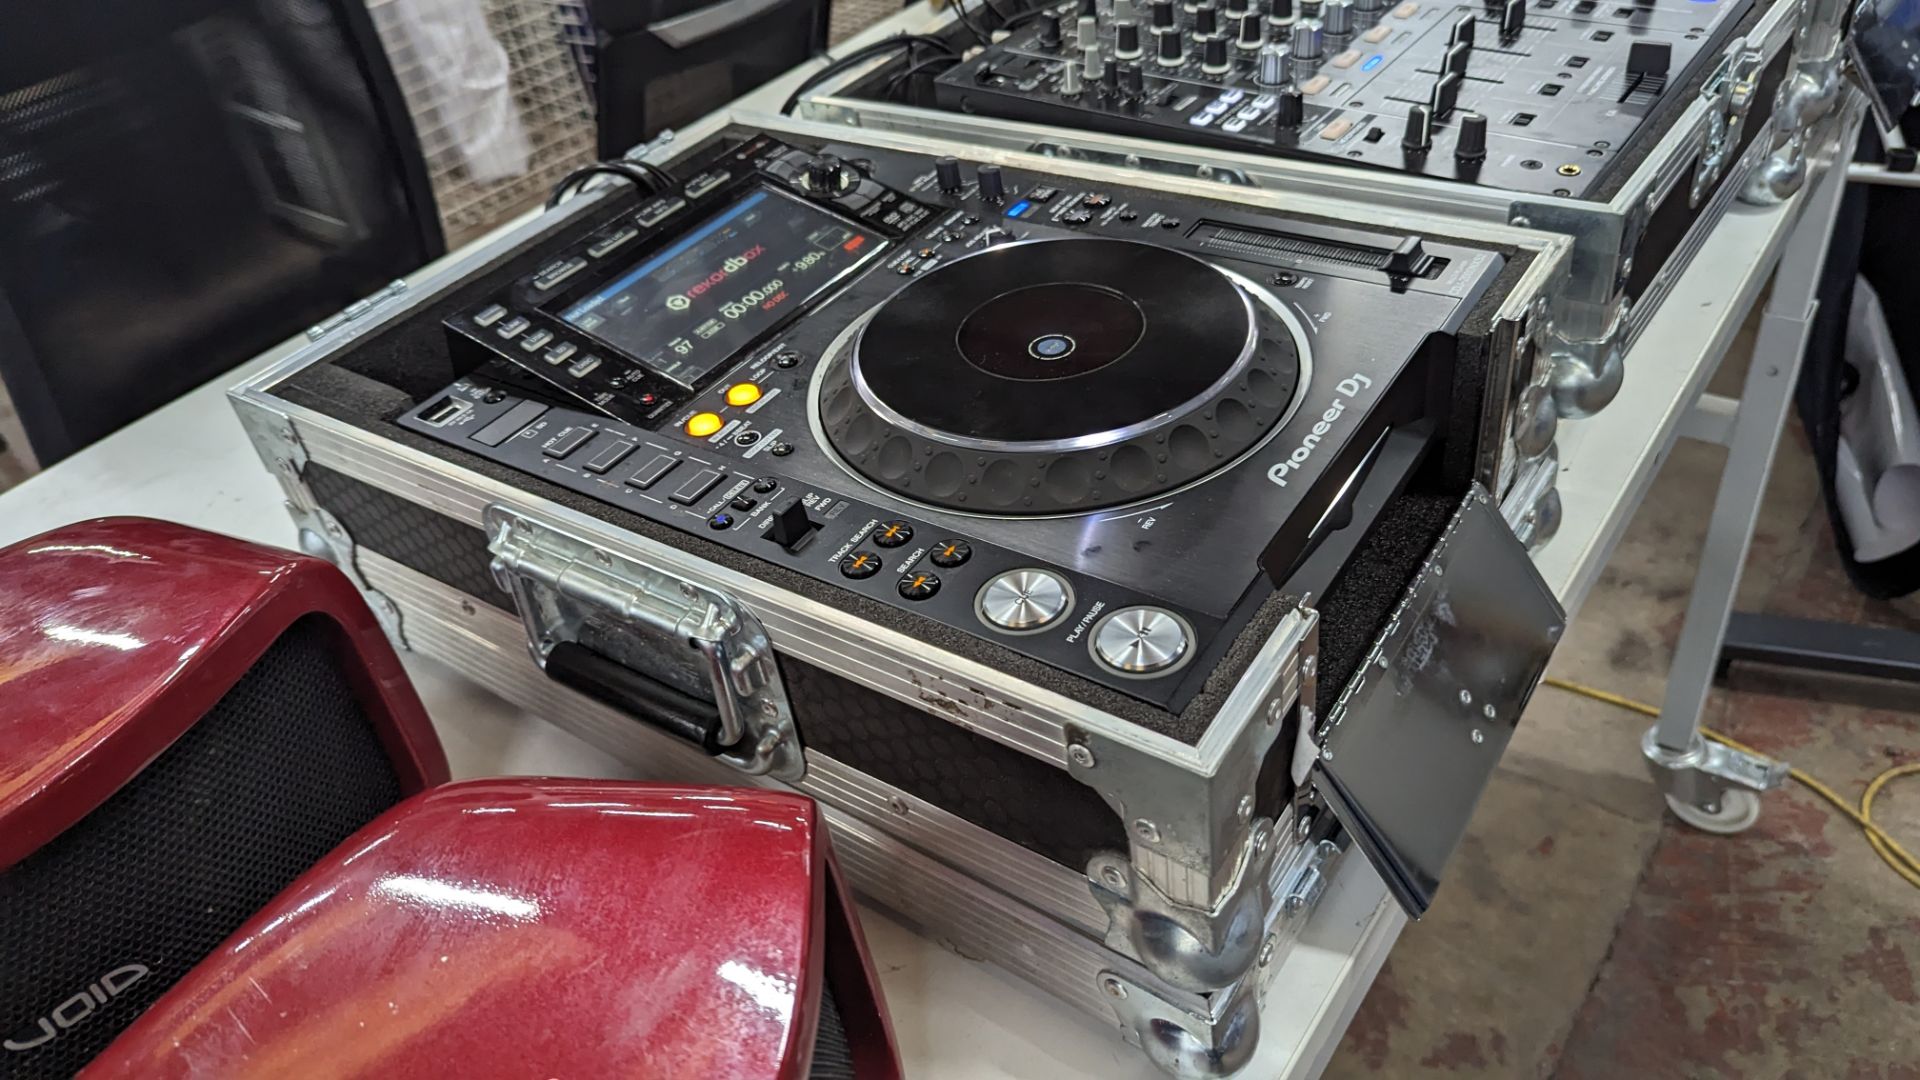 Pioneer Pro DJ package: DJM-900NXS2 Mixer & 2x DJM-900NXS2 multi players - Image 49 of 55